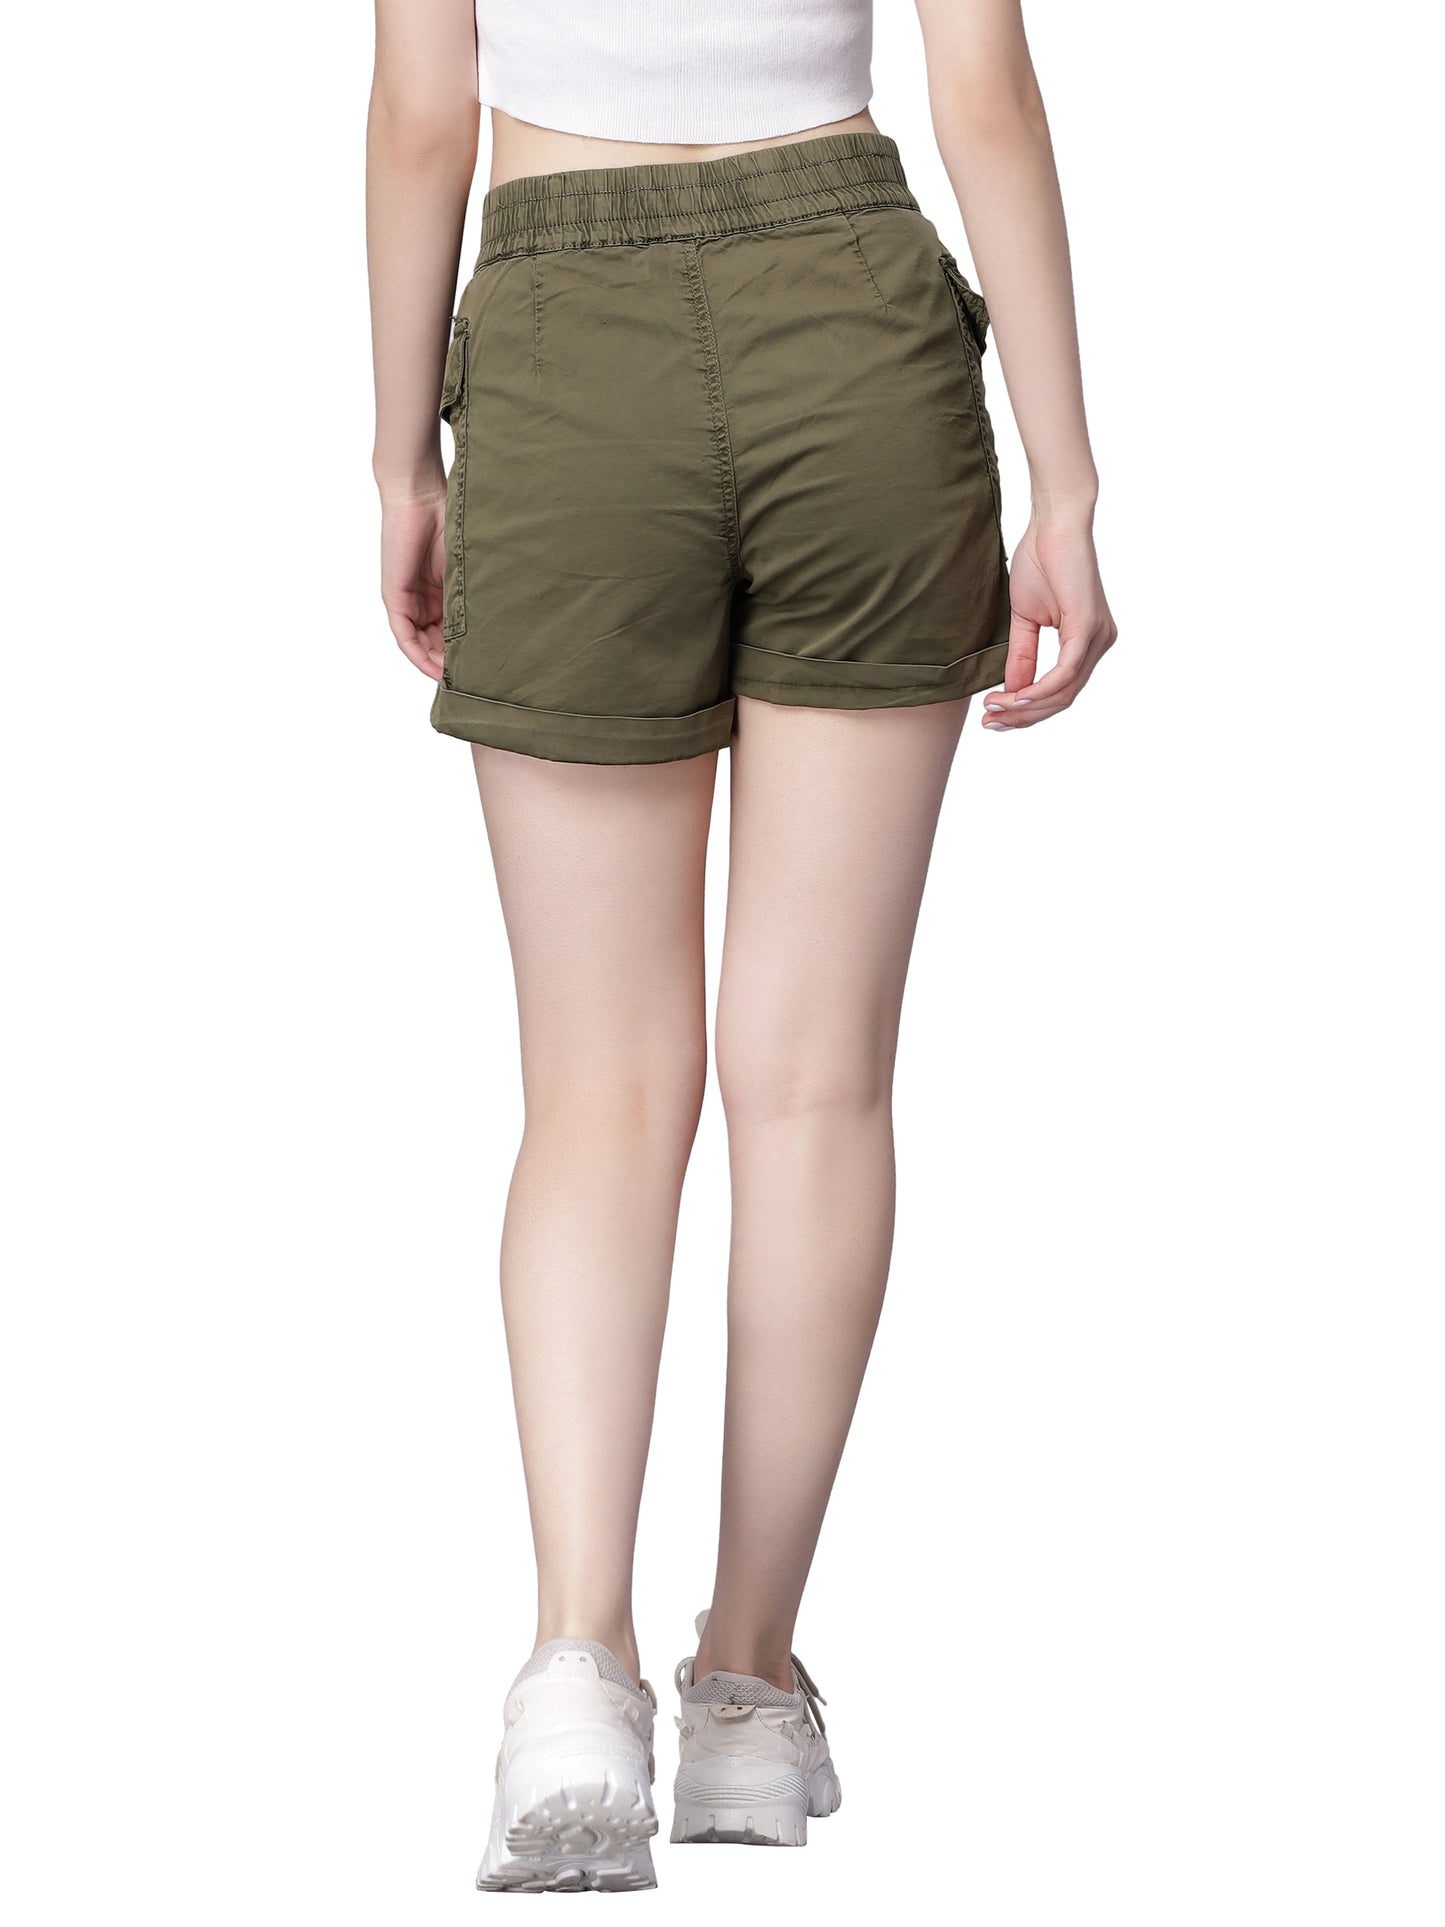 NUEVOSDAMAS Women Pure Cotton Cargo Yoga Shorts - Olive Green